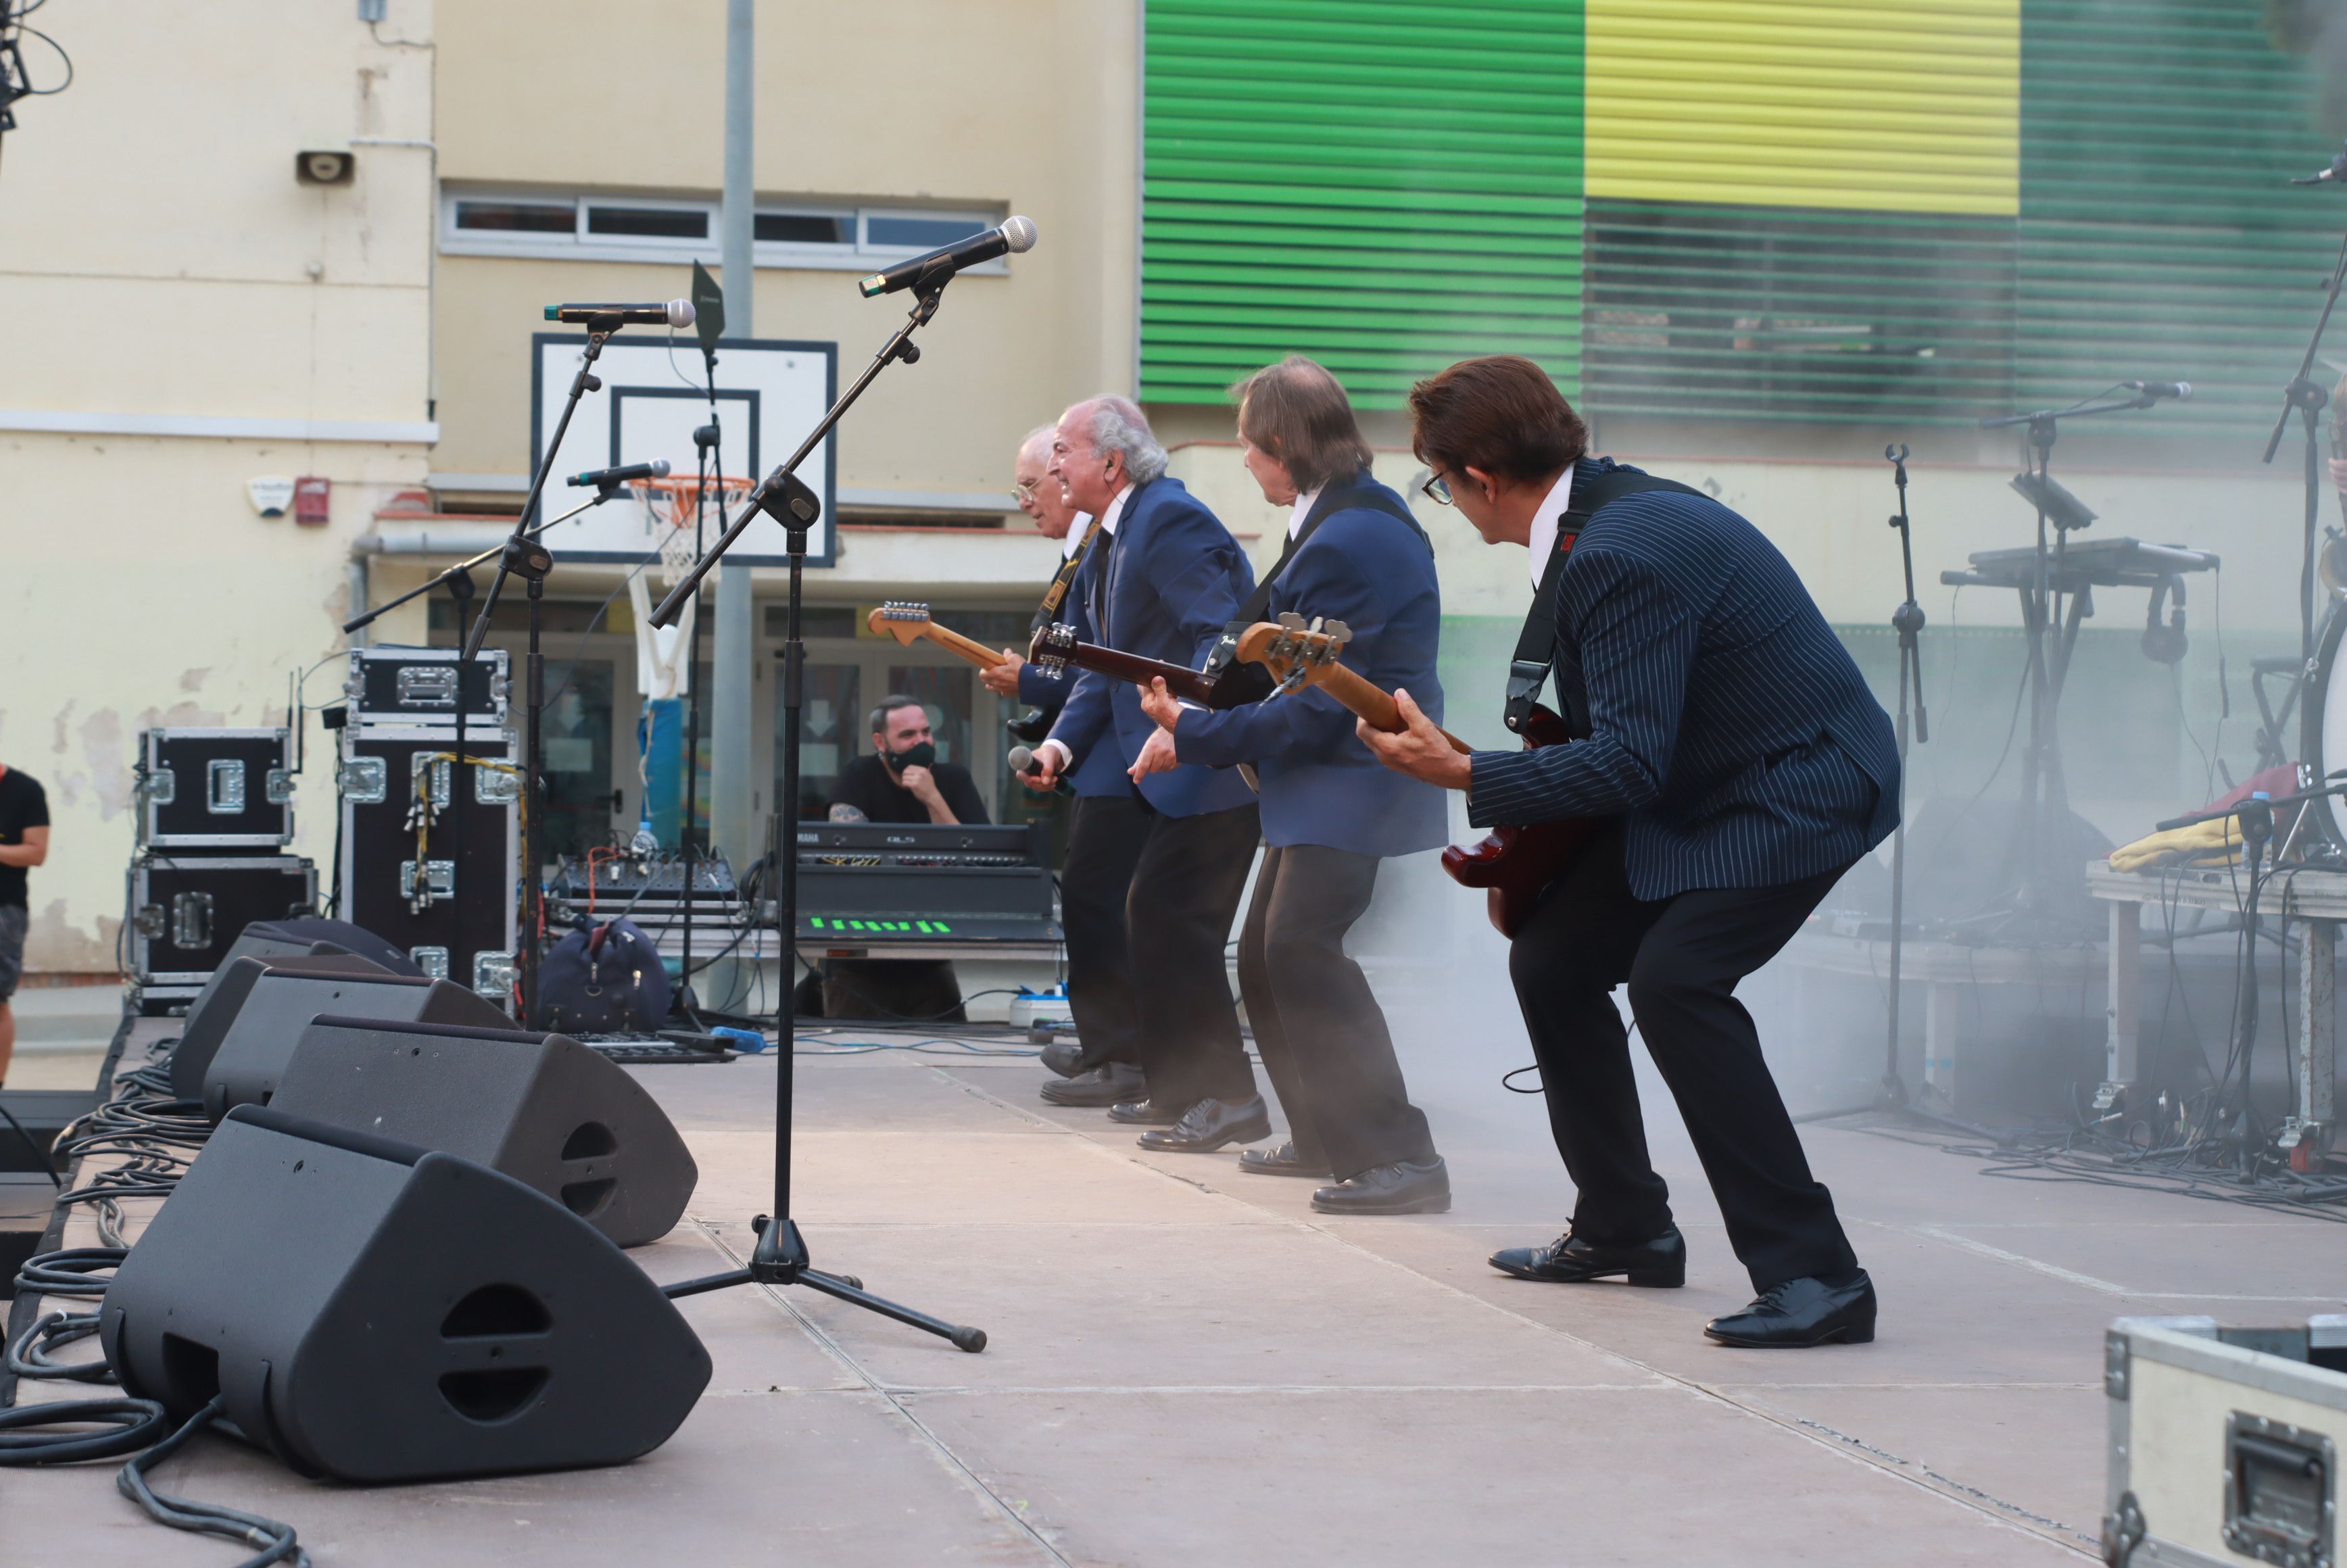 Concert de Los Sirex per Festa Major a Rubí. FOTO: Josep Llamas